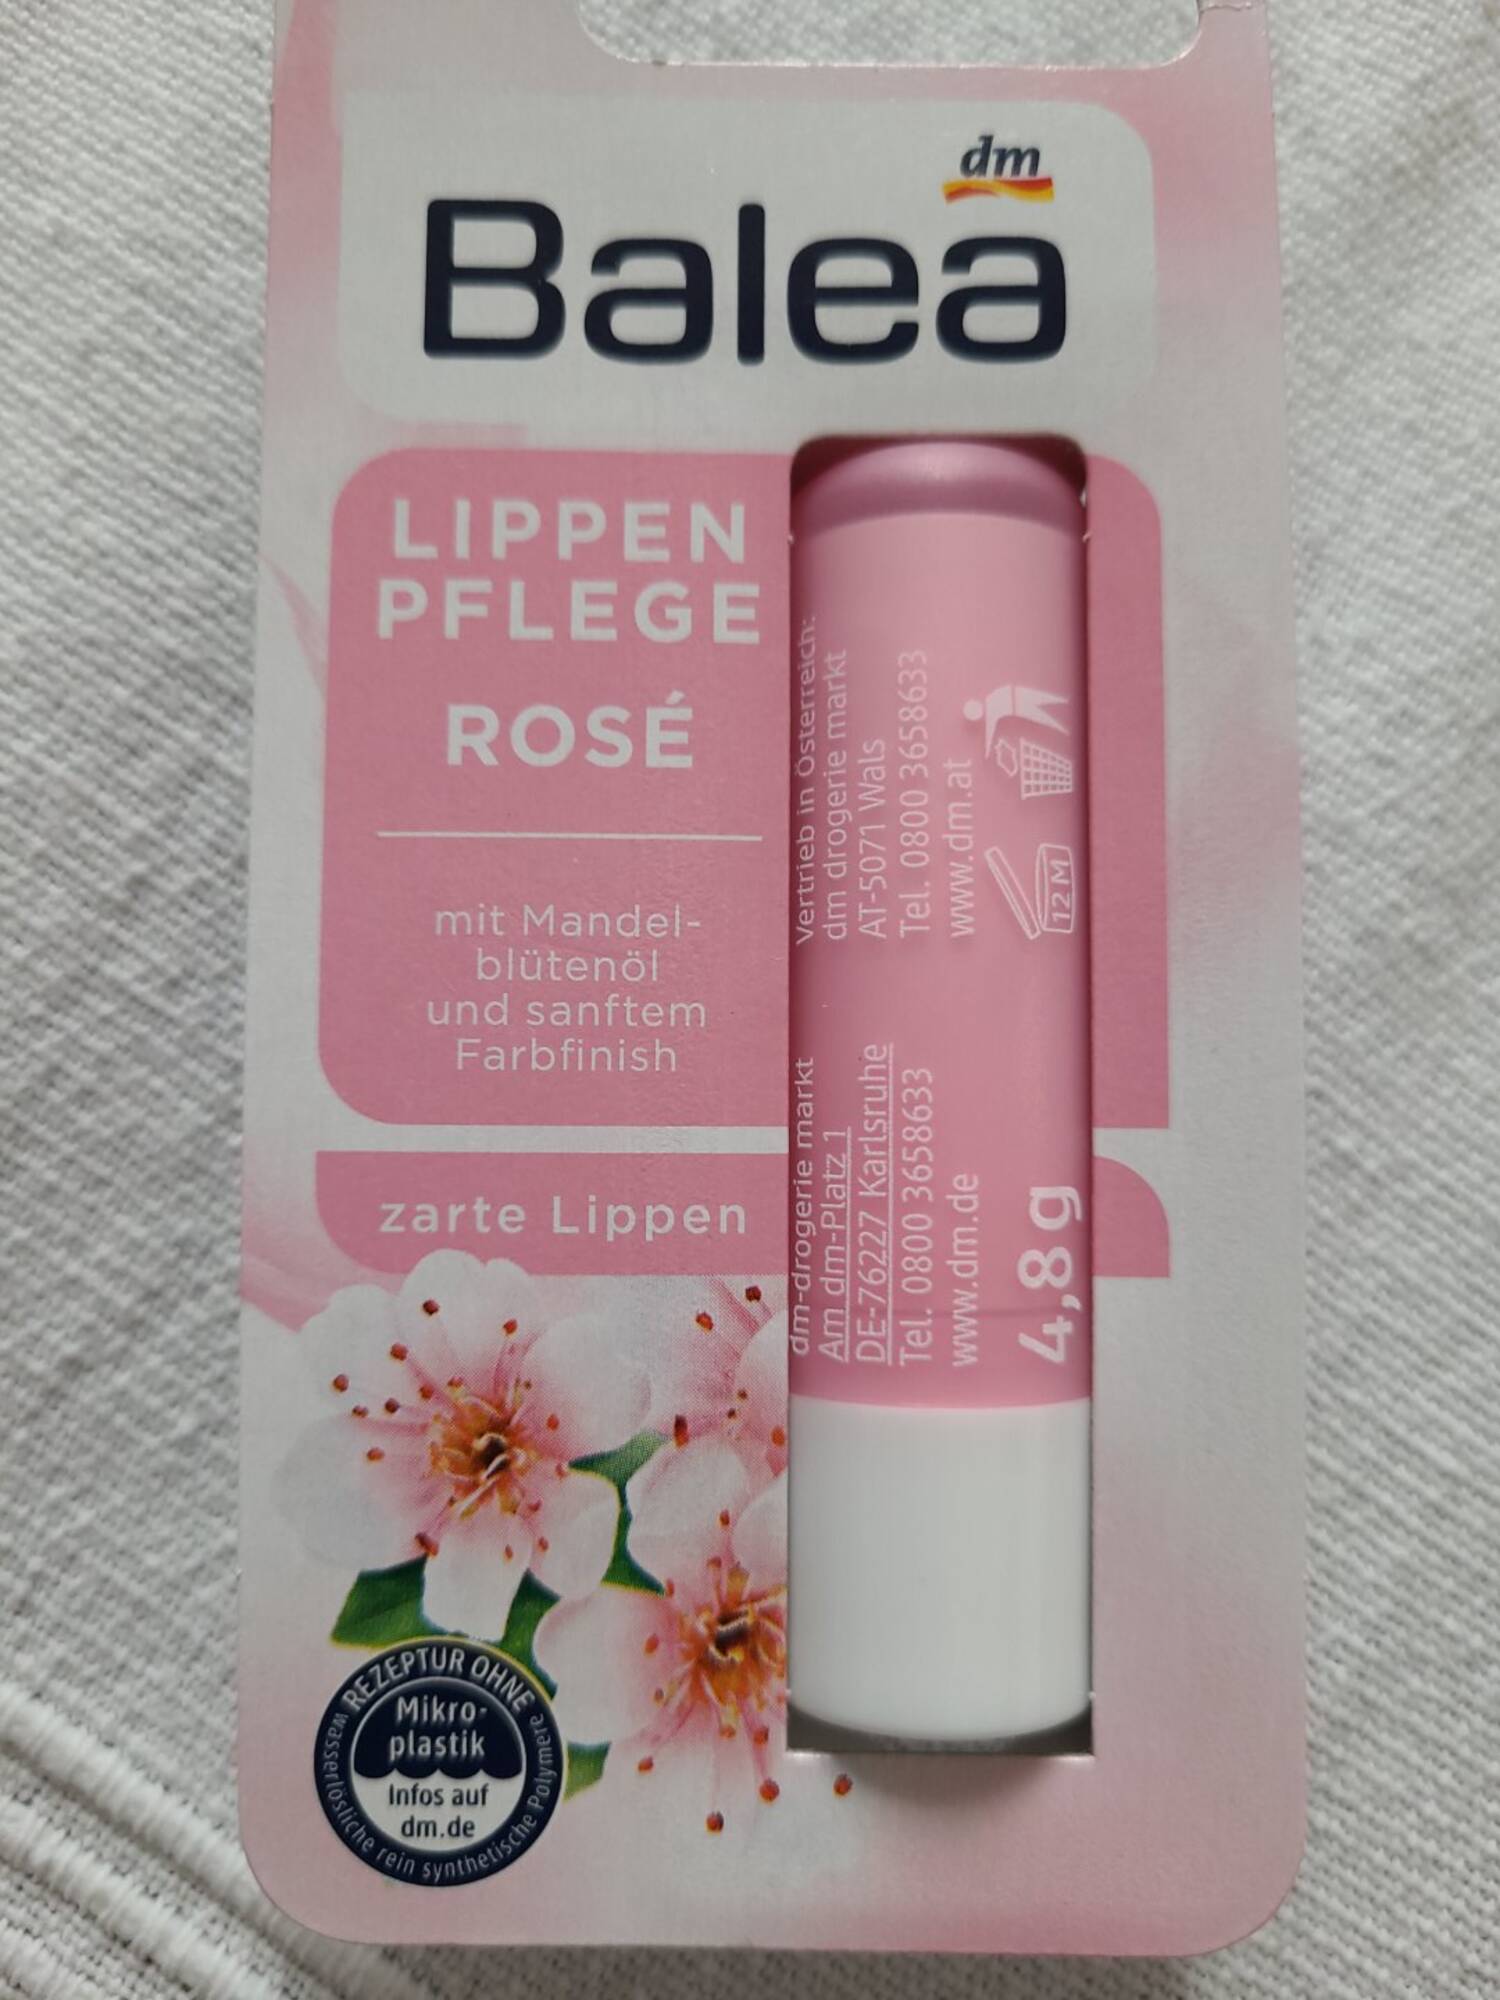 BALEA - Lippen pflege rosé